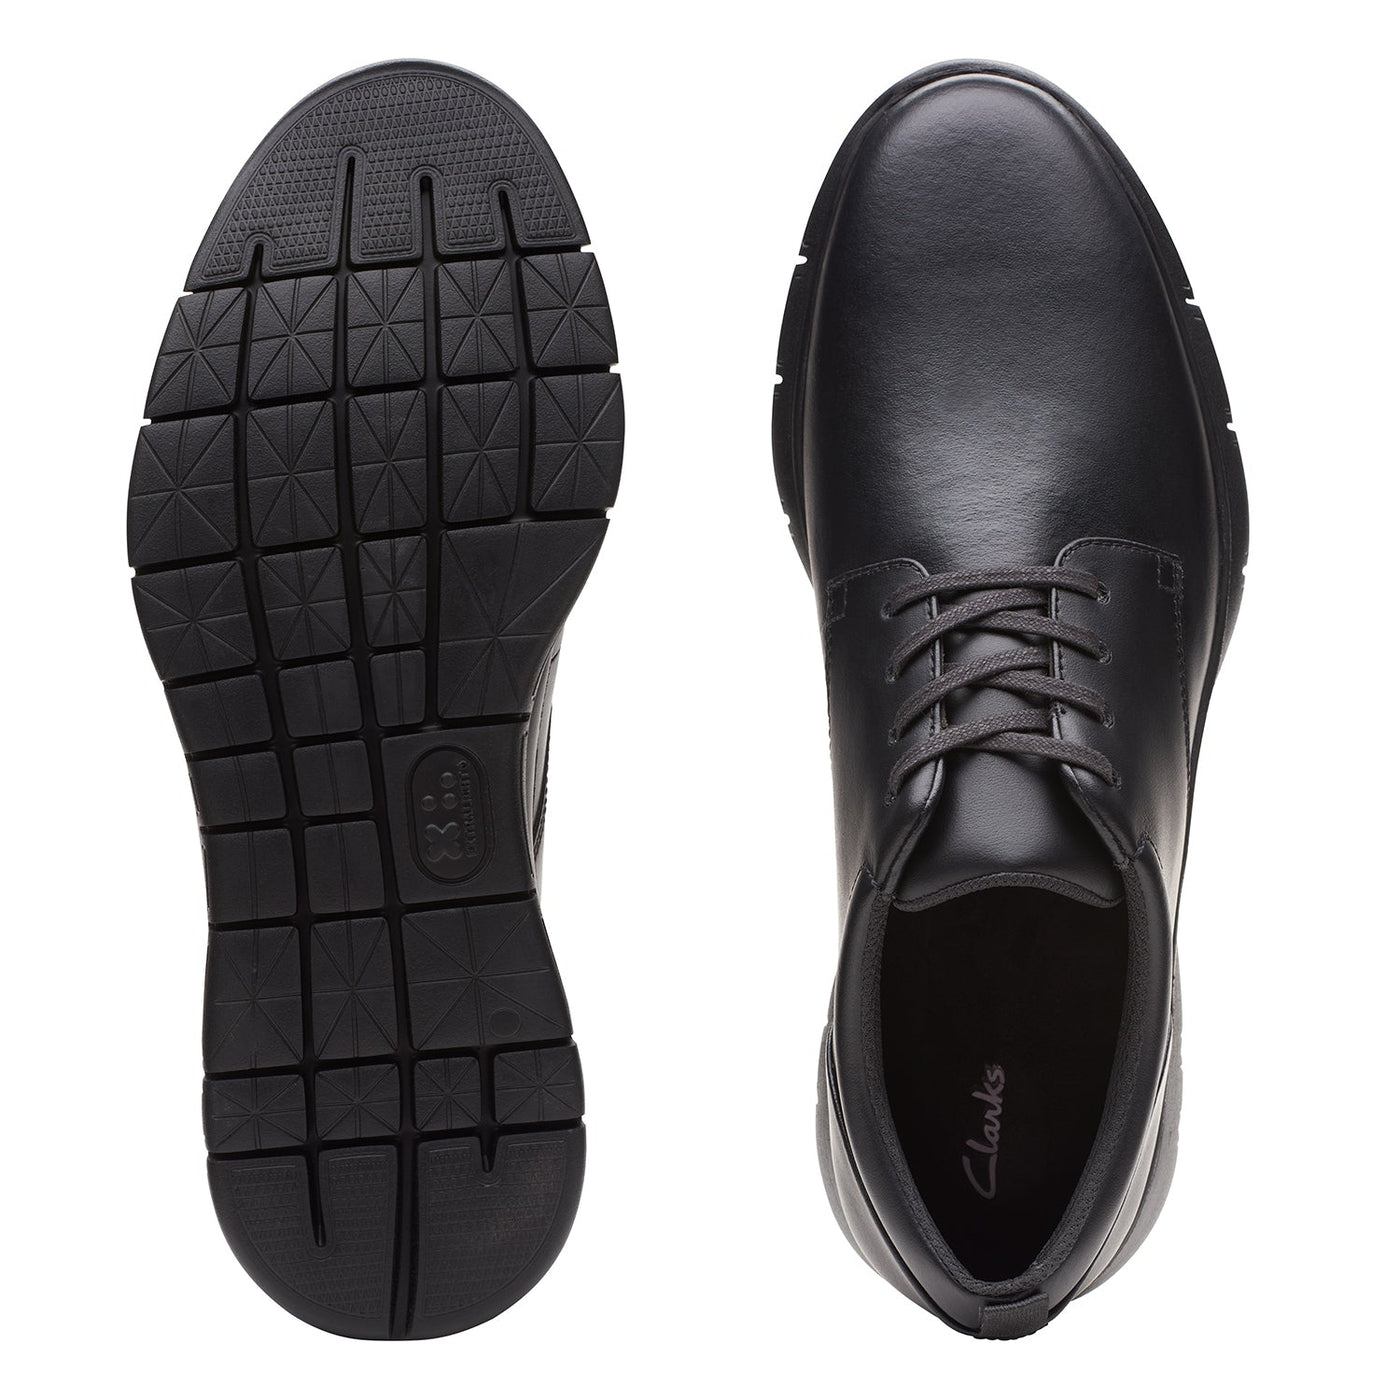 Mens - LT Tie Black Leather